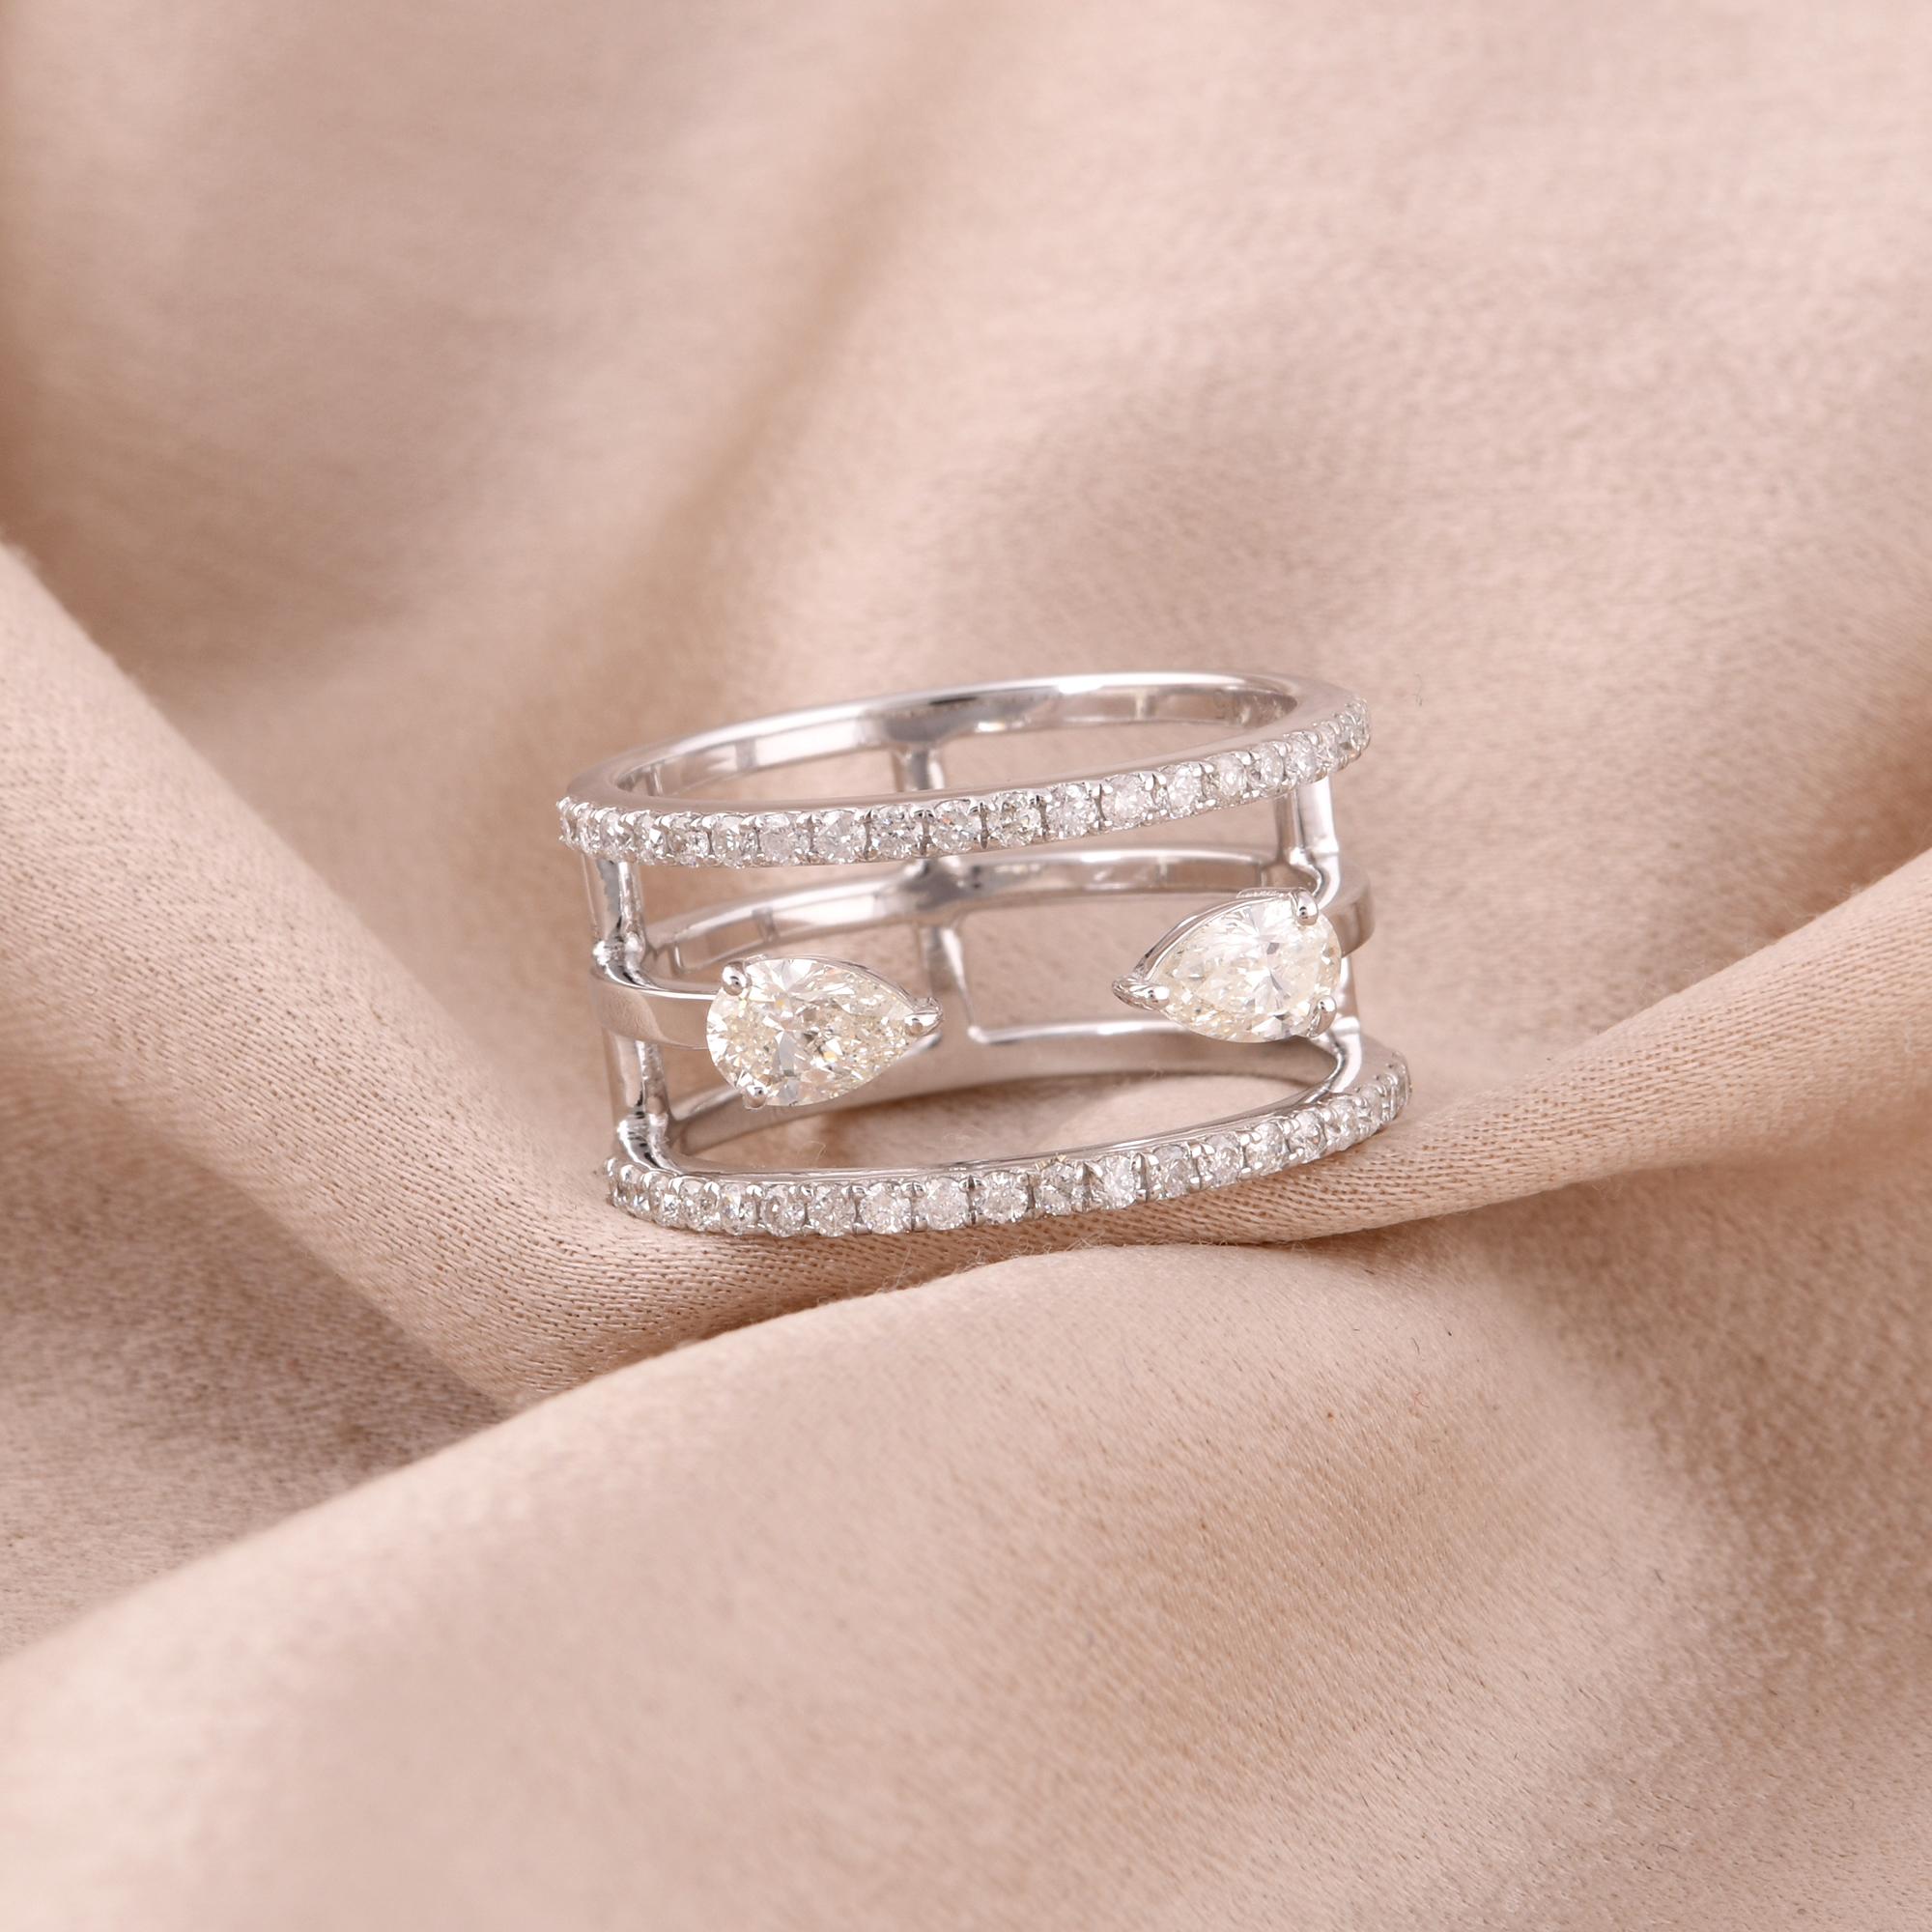 For Sale:  1 Ct Pear Round Diamond Three Band Ring 18 Karat White Gold Handmade Jewelry 2